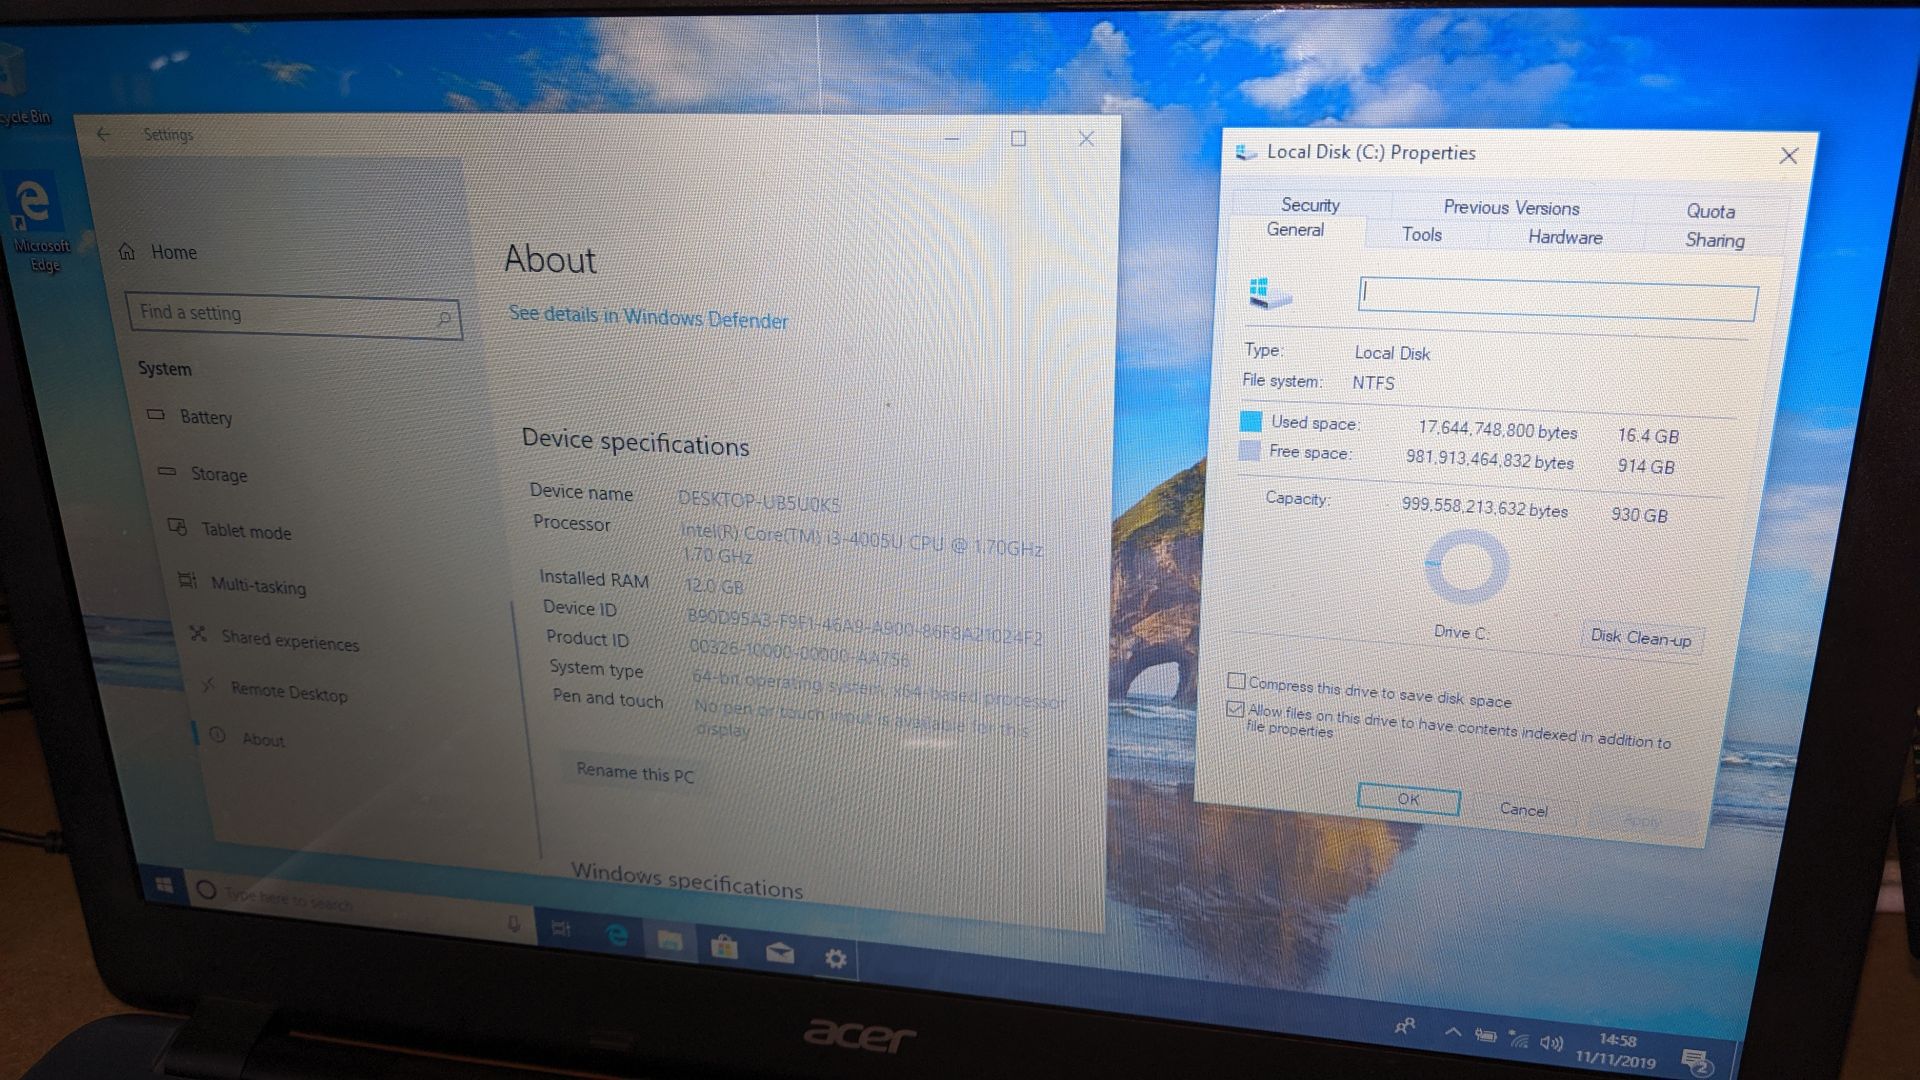 Acer Aspire E15 widescreen notebook computer, Intel Core i3-4005u CPU @1.7GHz, 12Gb RAM, 1Tb HDD - Image 5 of 6